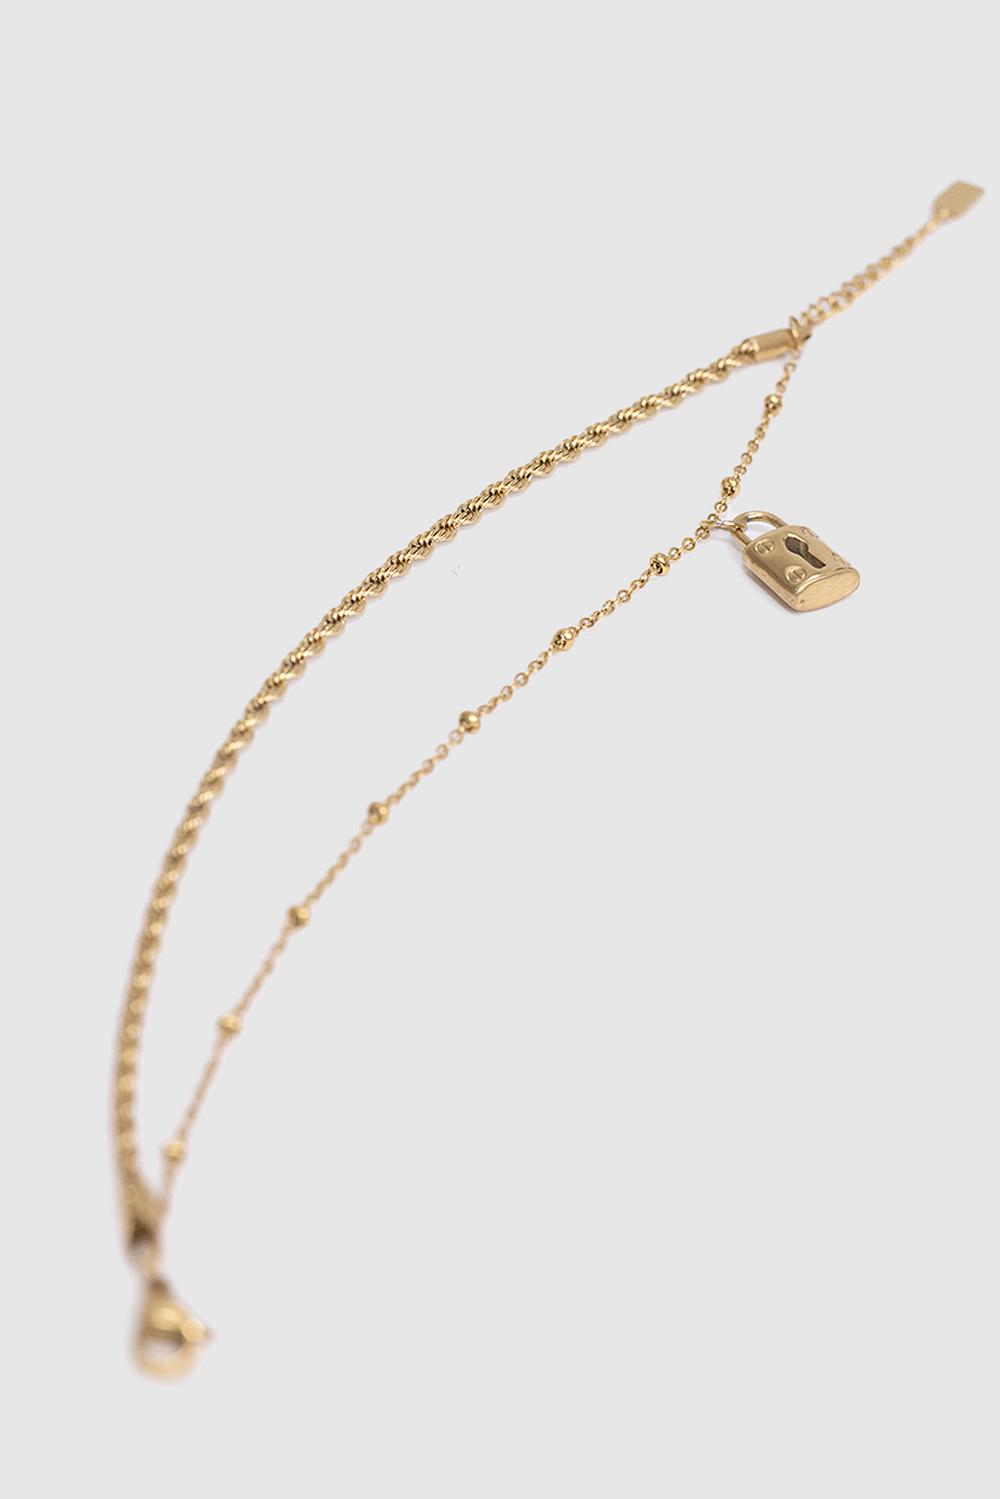 Golden bracelet with lock pendant